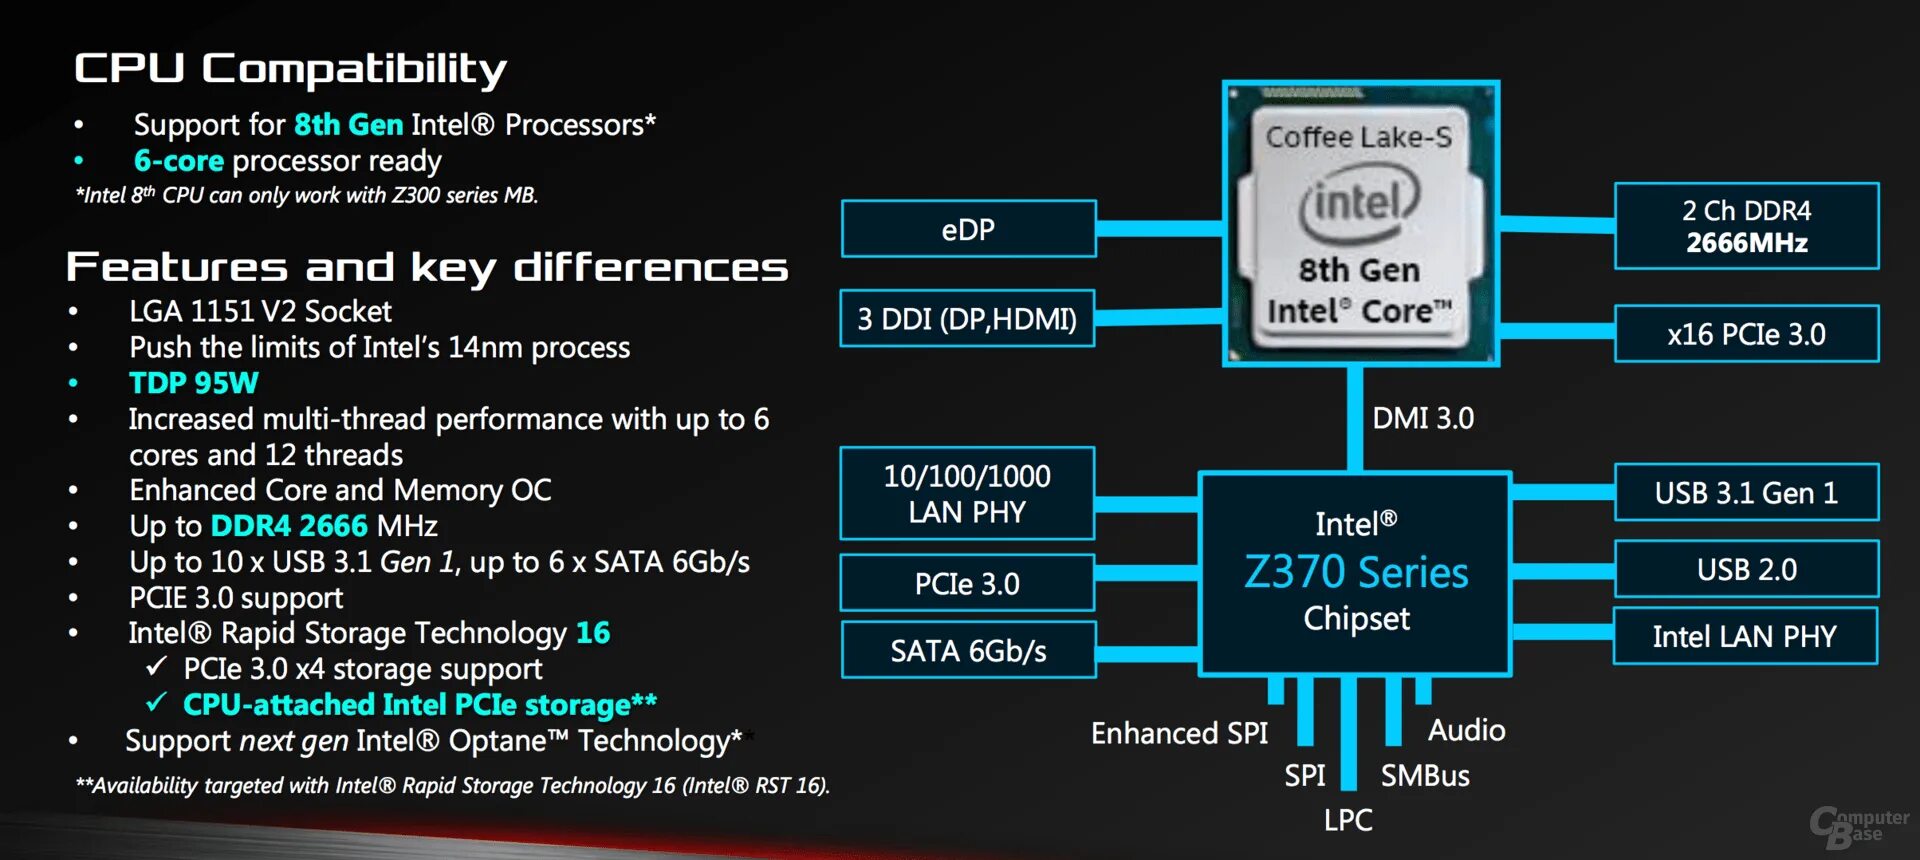 7 series chipset. Intel Coffee Lake-s IMC. Архитектура Intel i7 8700. Intel DMI 4.0. Processor 8th Gen Intel.